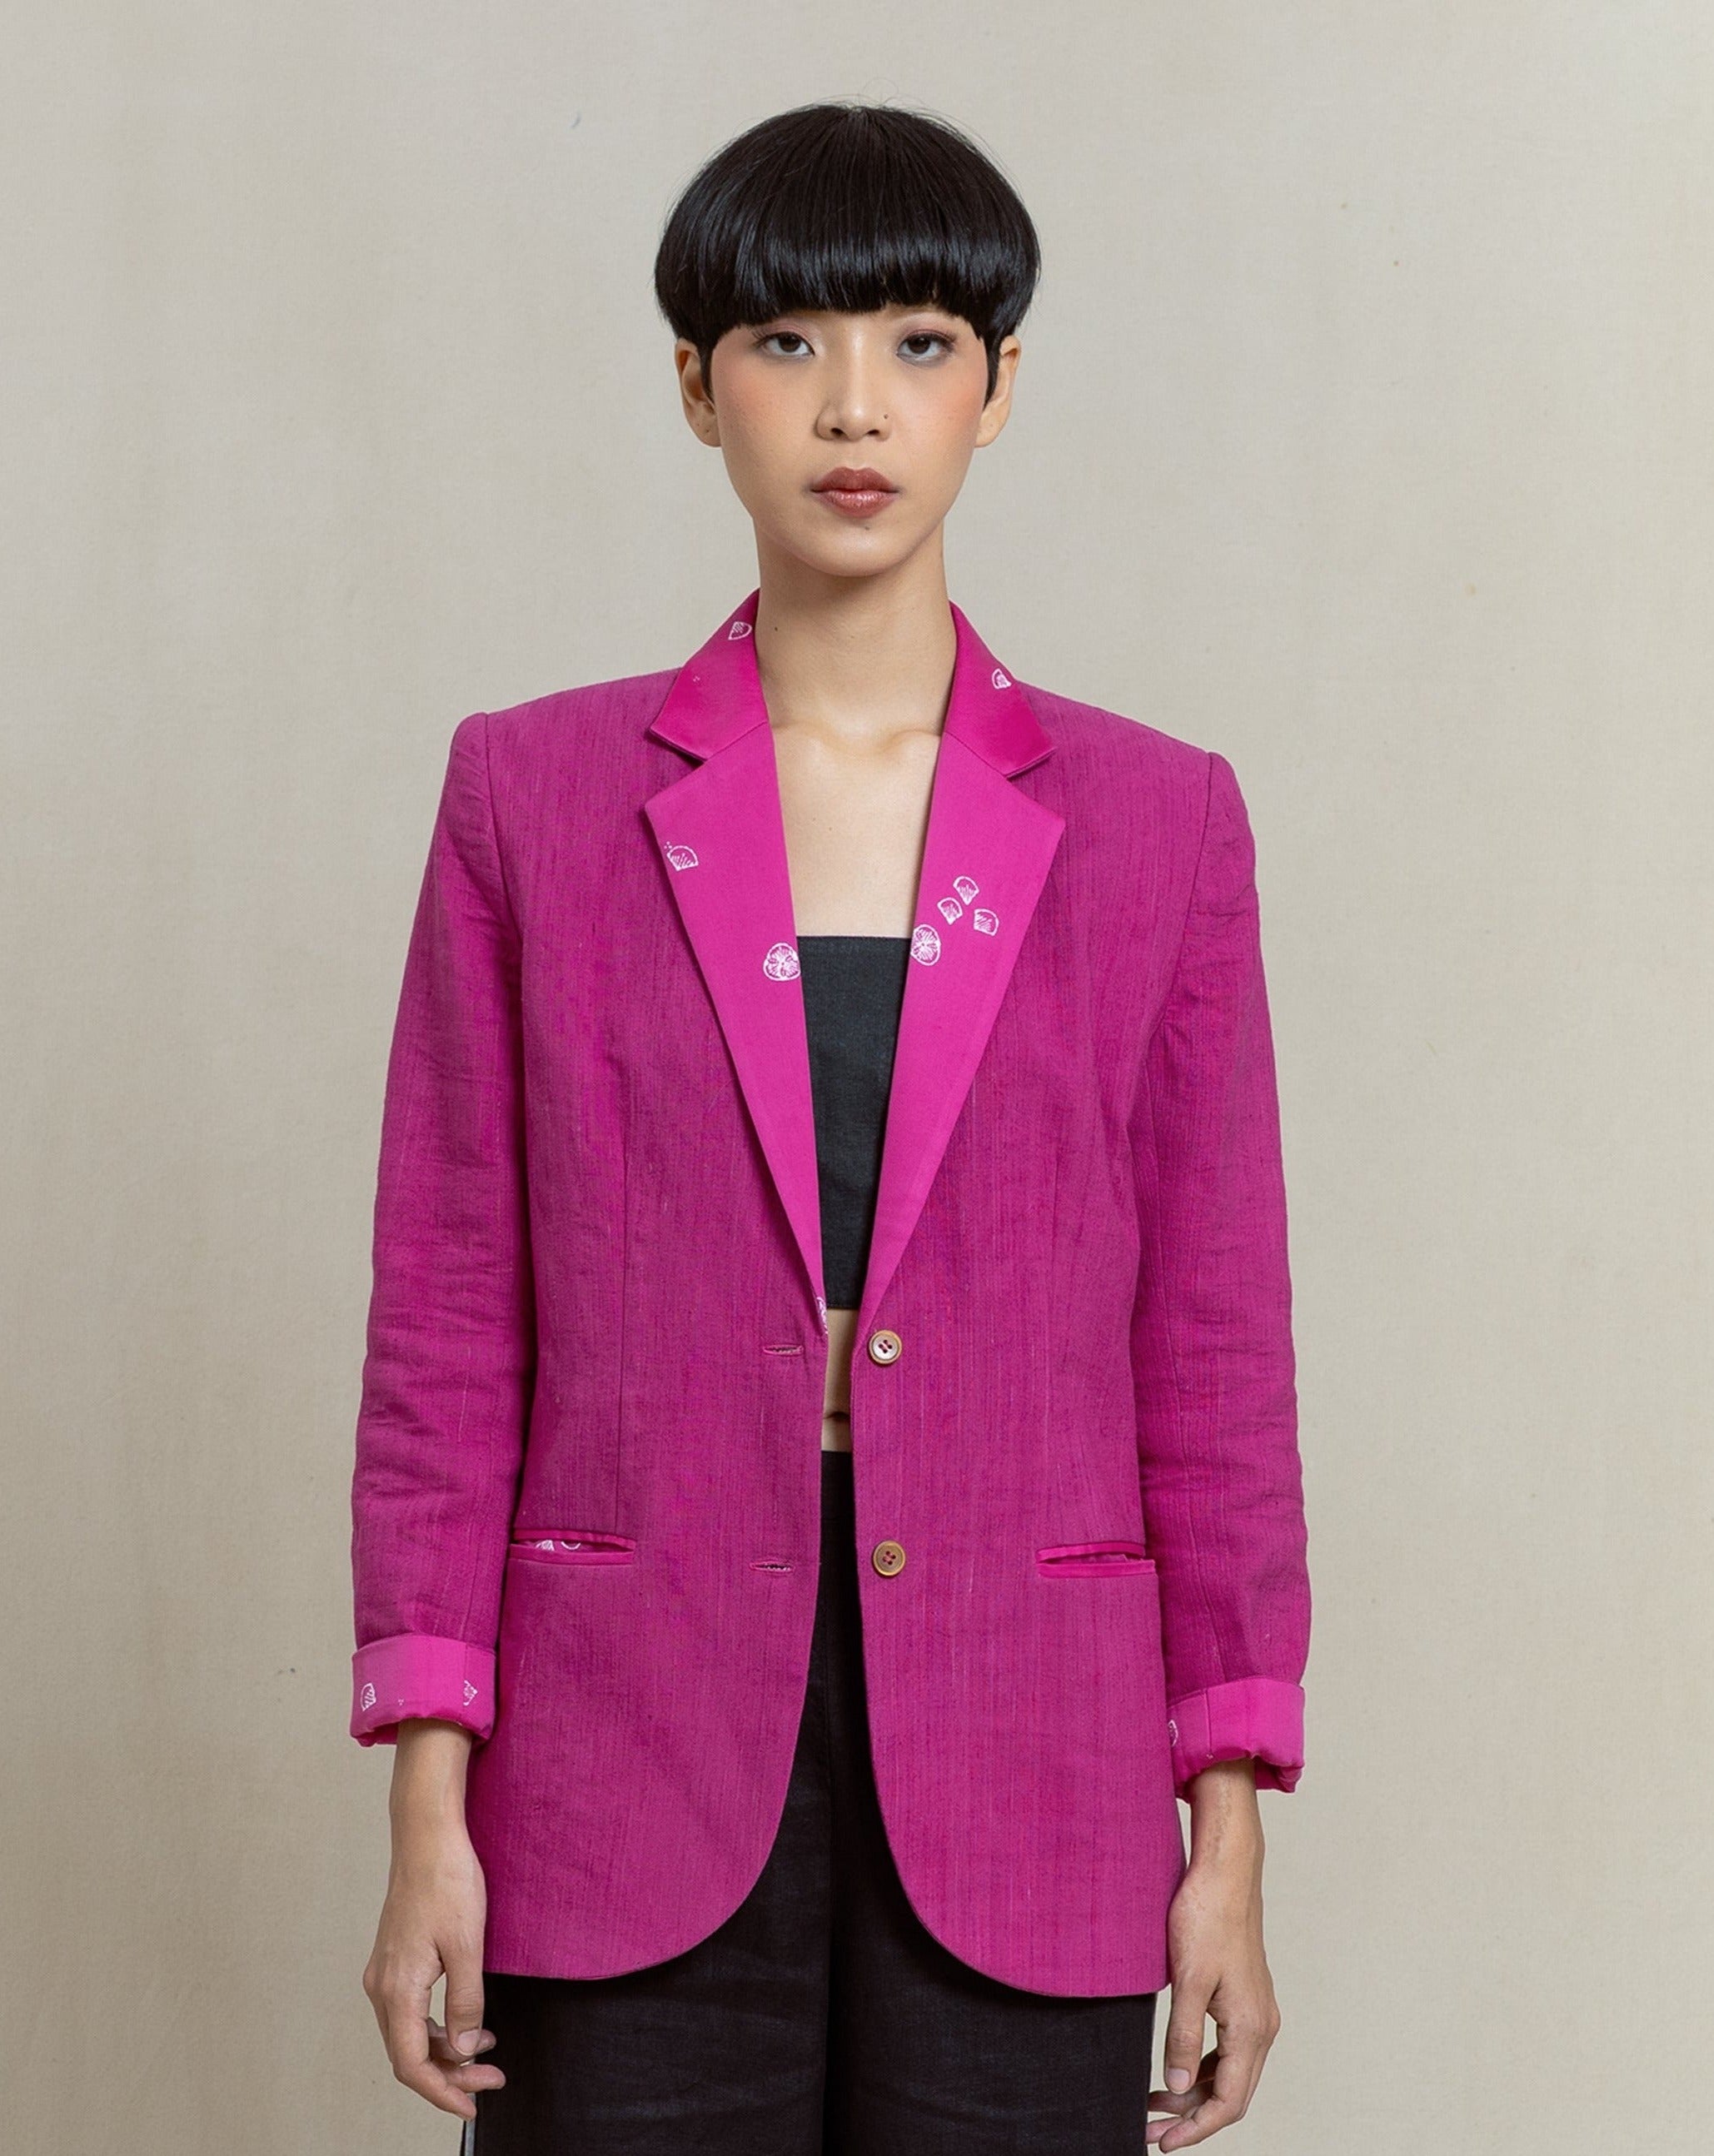 blazer, batik blazer, pink blazer, women's blazer, women's fashion, naturally dyed